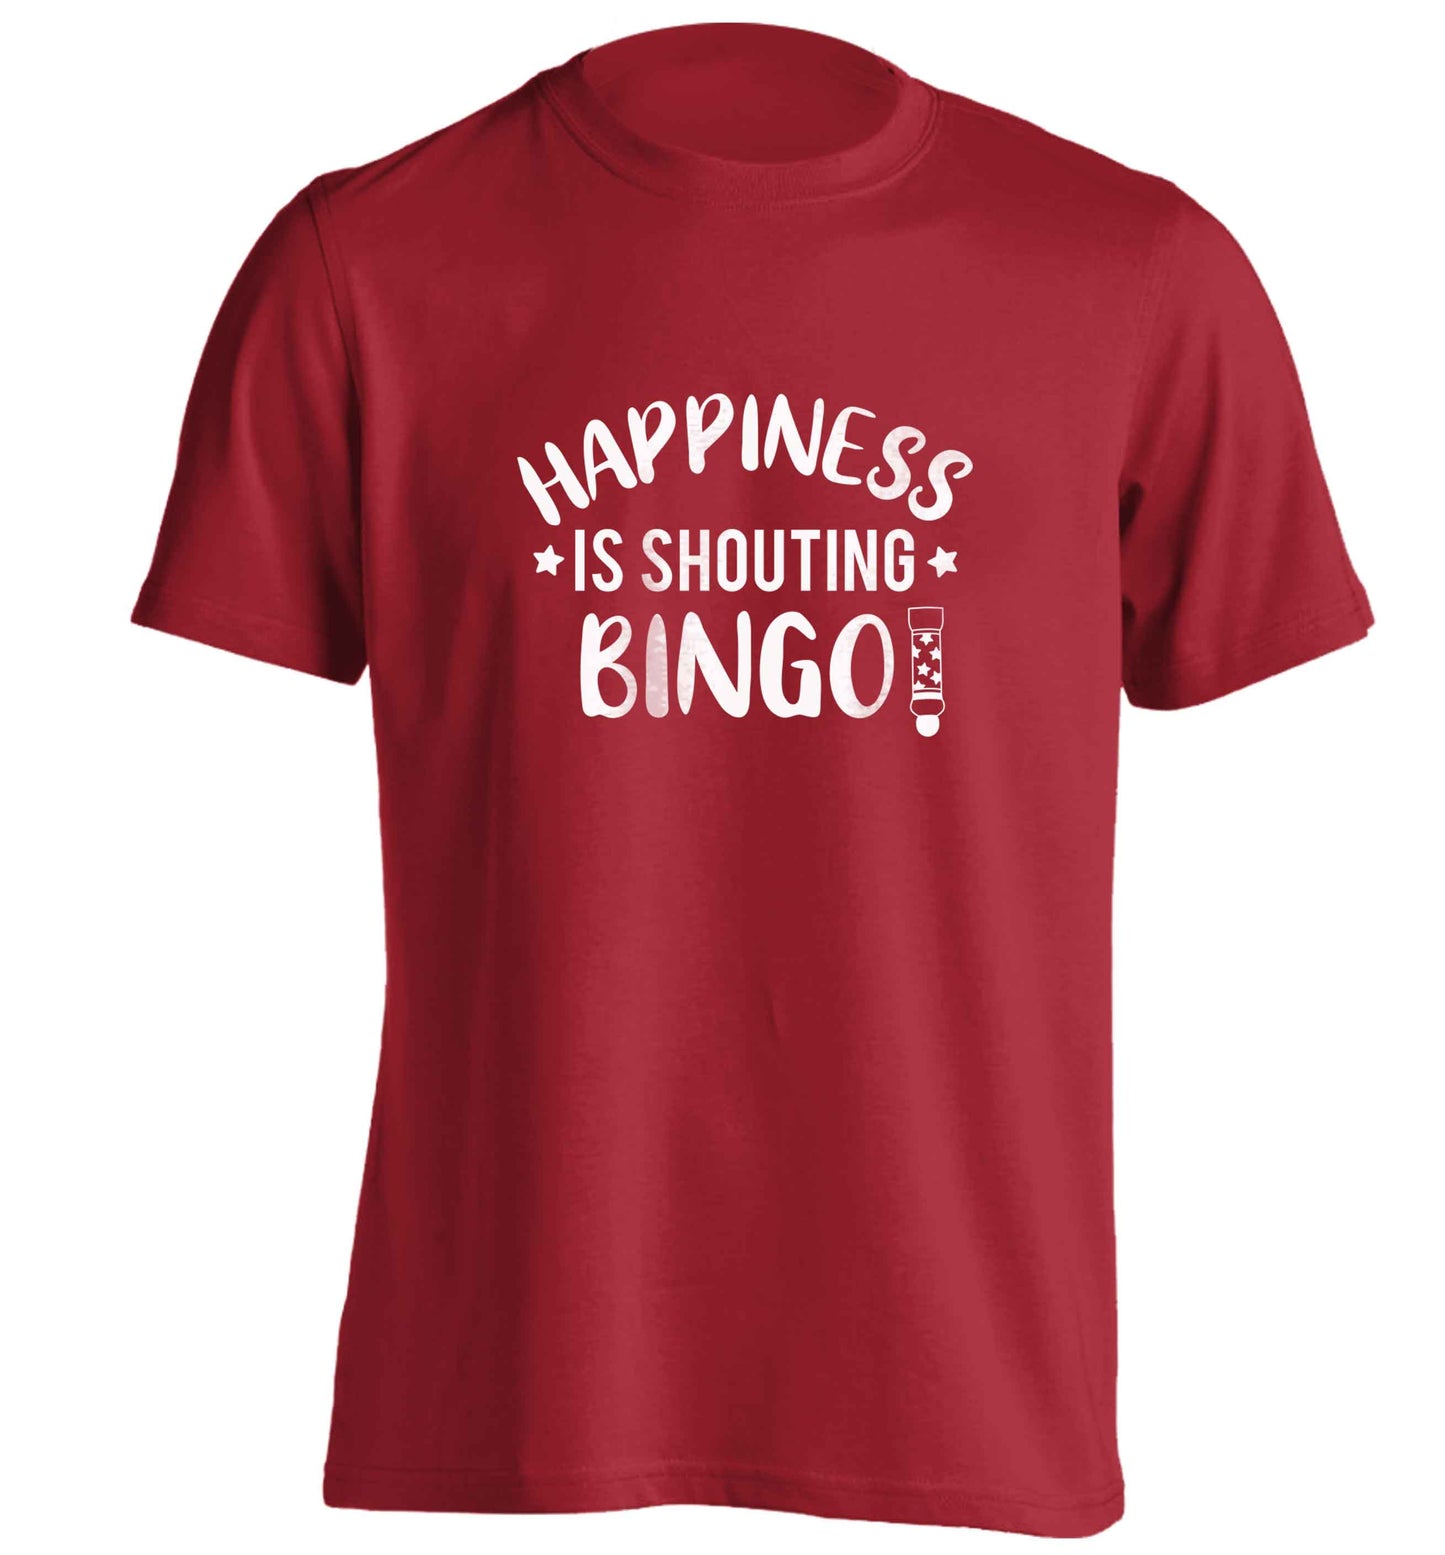 Happiness is shouting bingo! adults unisex red Tshirt 2XL